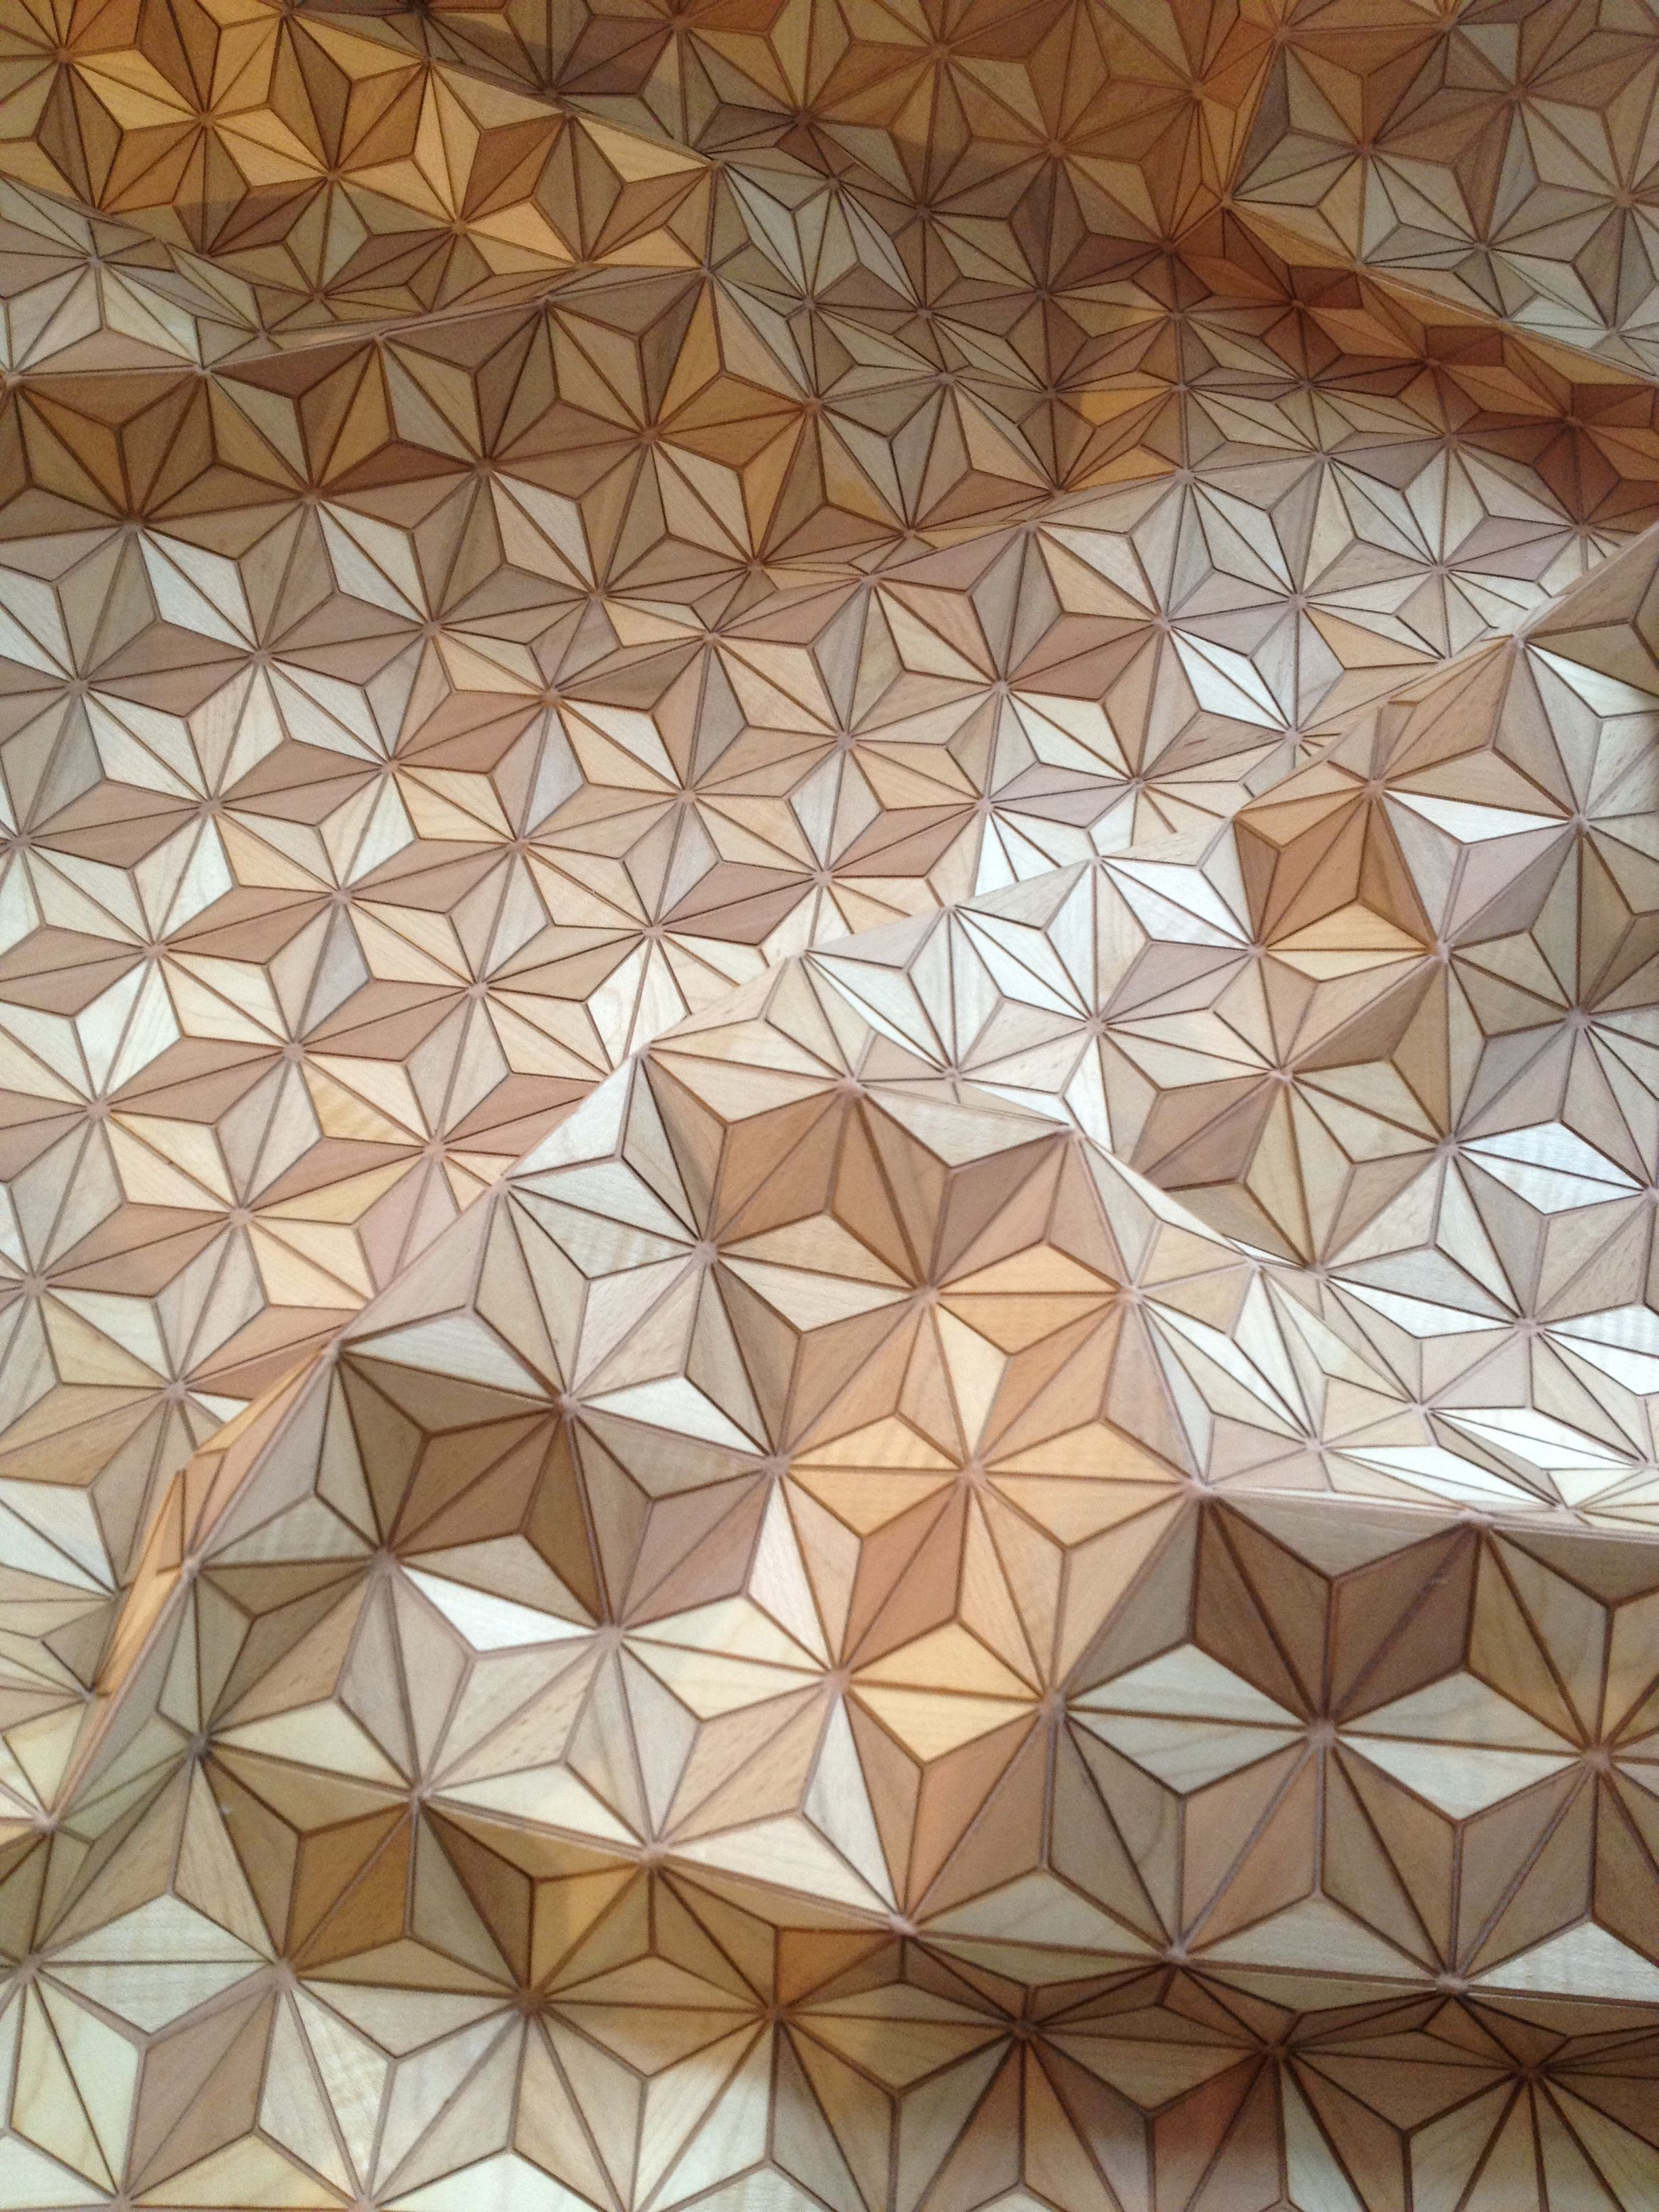 Tessellation Rug | Sacred Geometry | Pinterest | Patterns, Surface ...